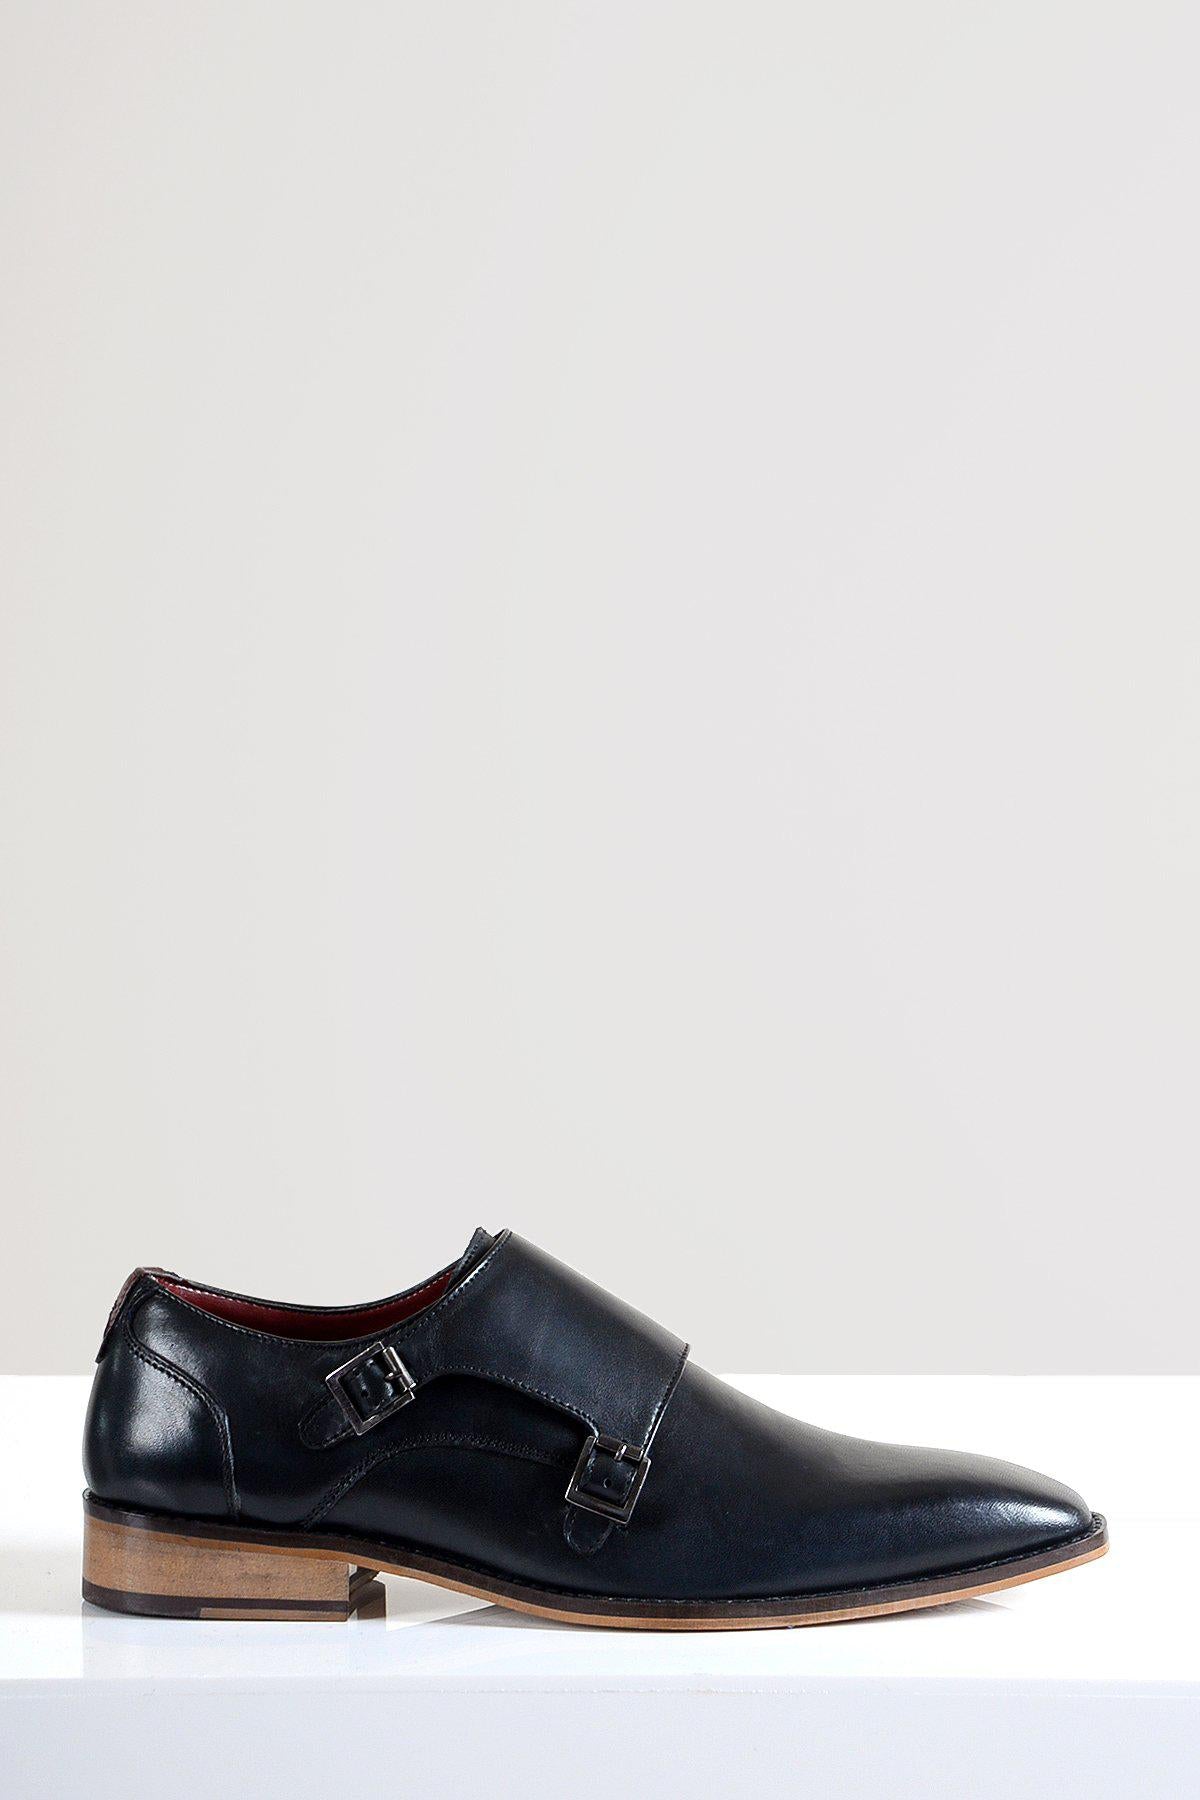 Men's Shoes | Leather Shoes for Men – Marc Darcy